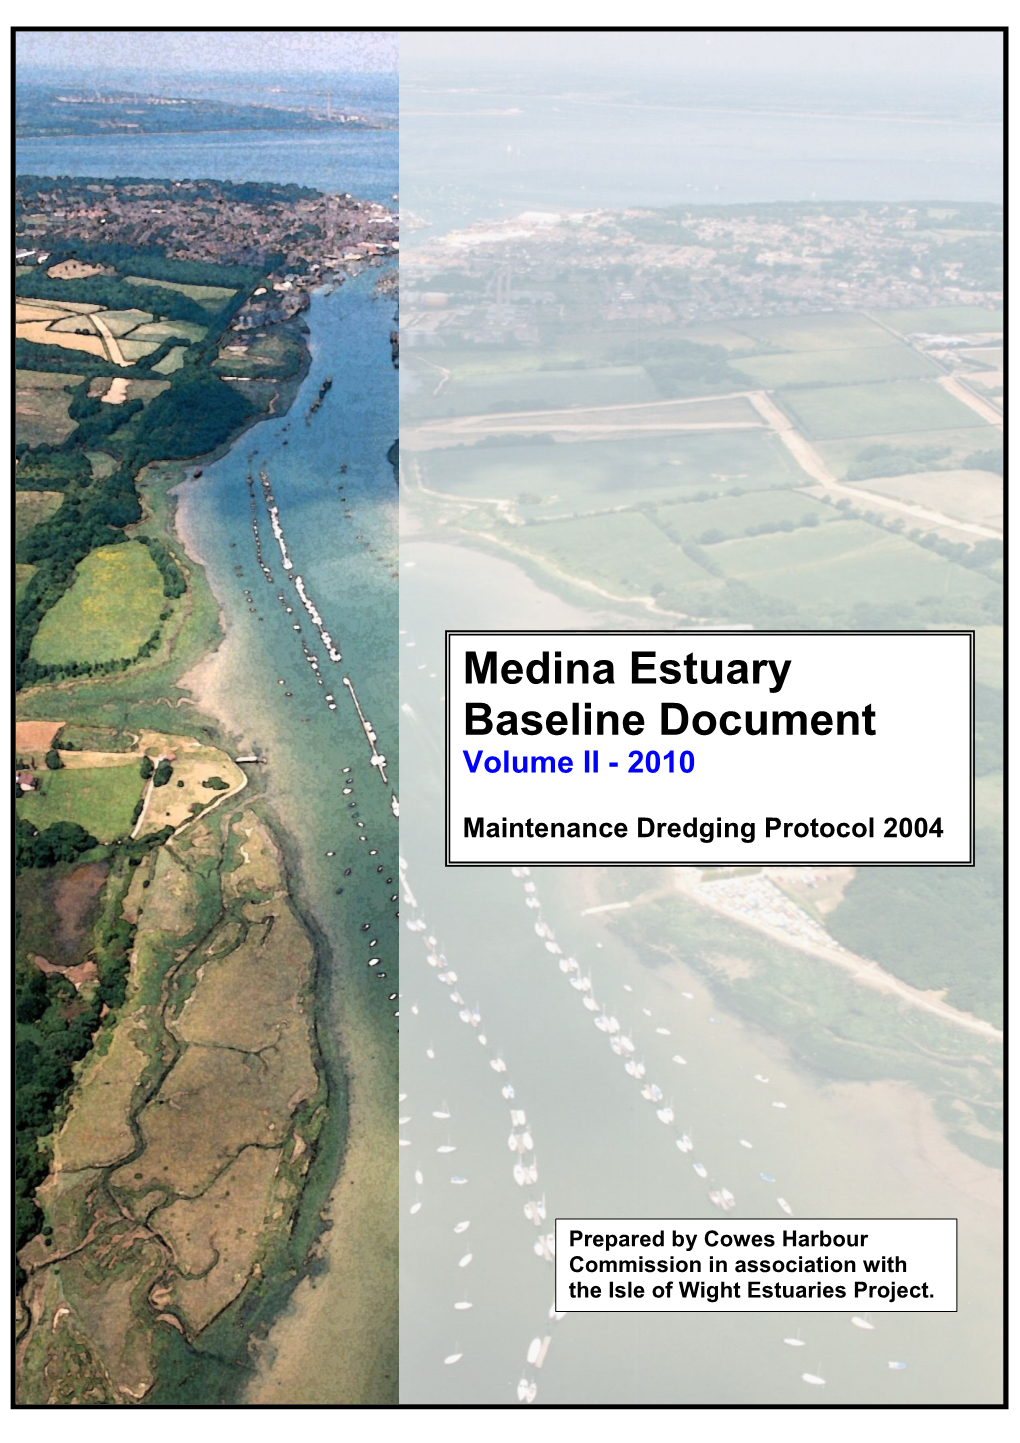 Medina Estuary Baseline Document Volume II - 2010